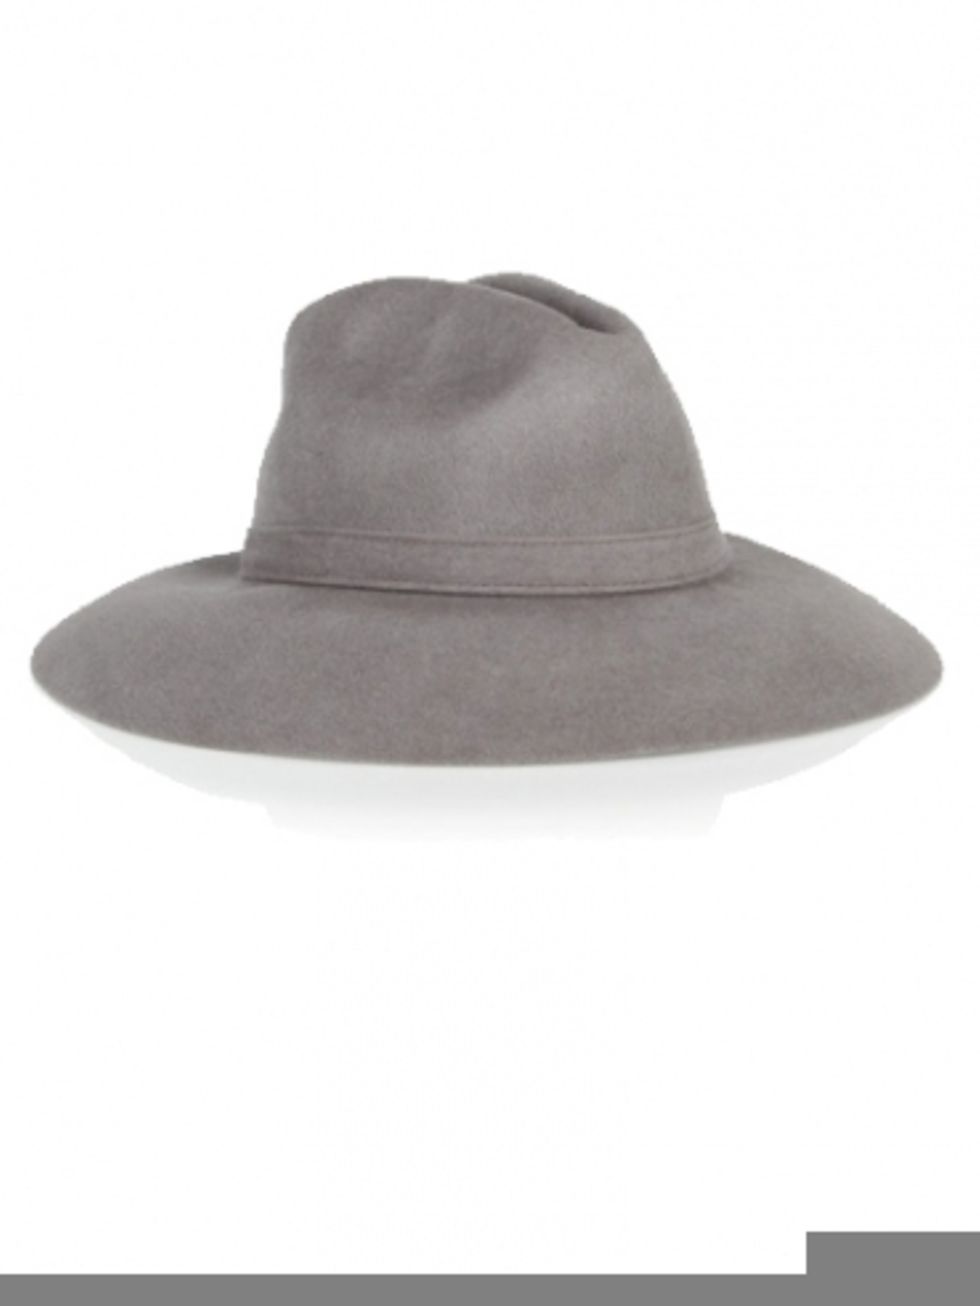 Hat, Brown, Headgear, Costume accessory, Costume hat, Black, Grey, Beige, Fedora, Costume, 